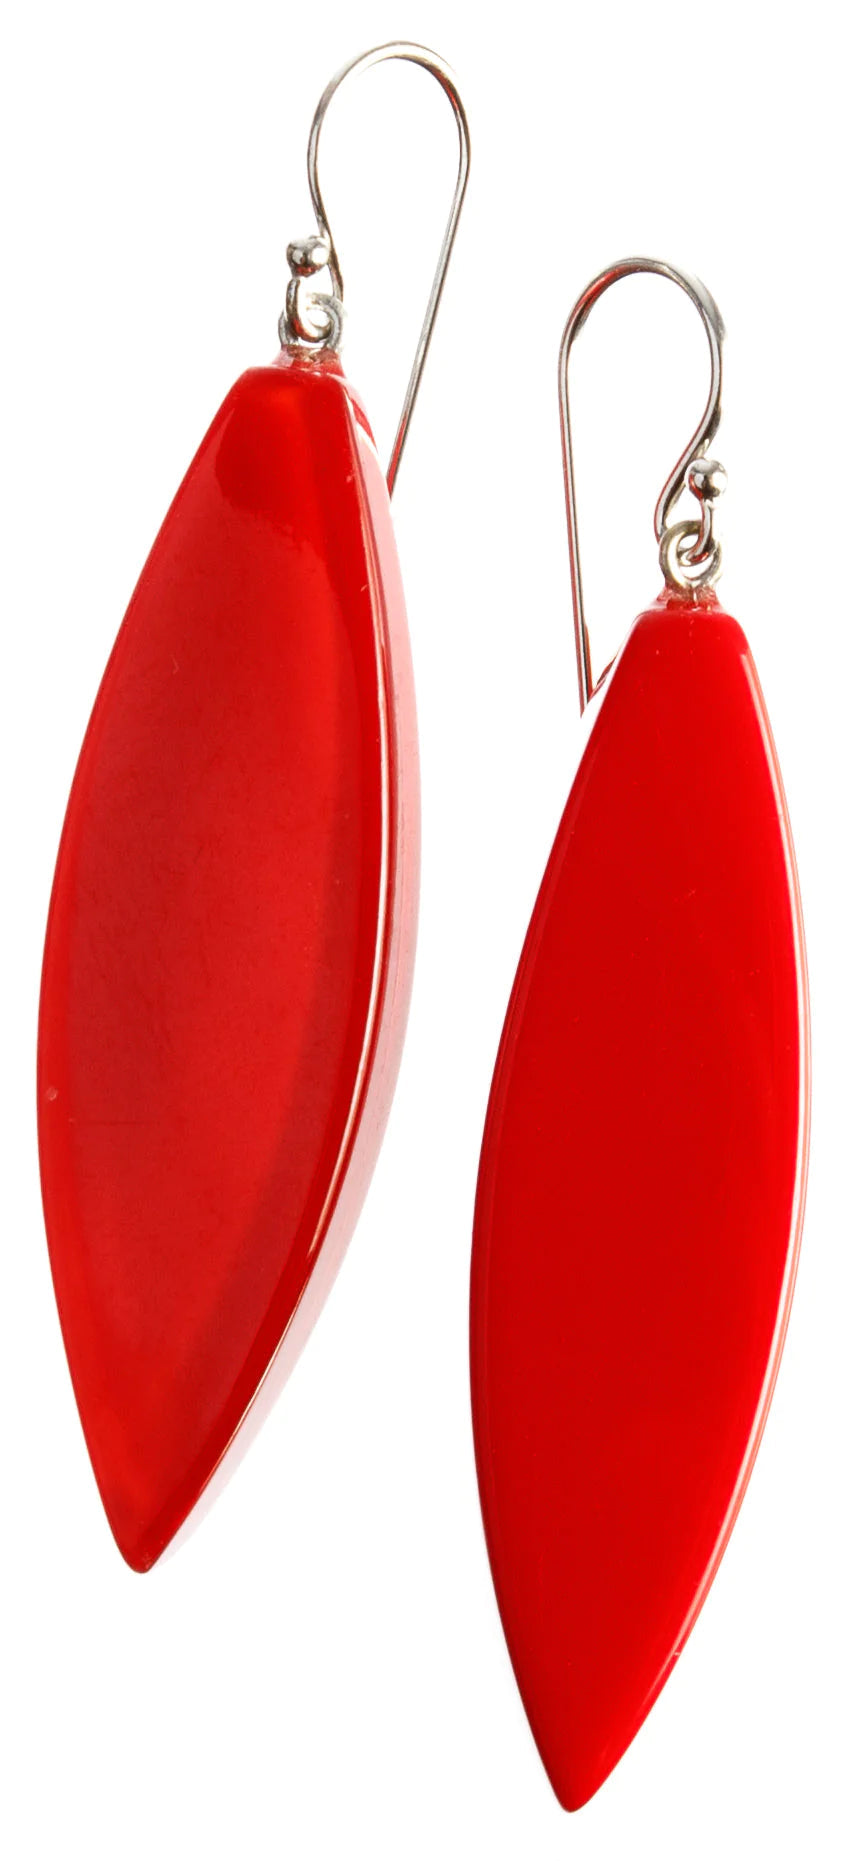 Long Red Earrings - The Nancy Smillie Shop - Art, Jewellery & Designer Gifts Glasgow